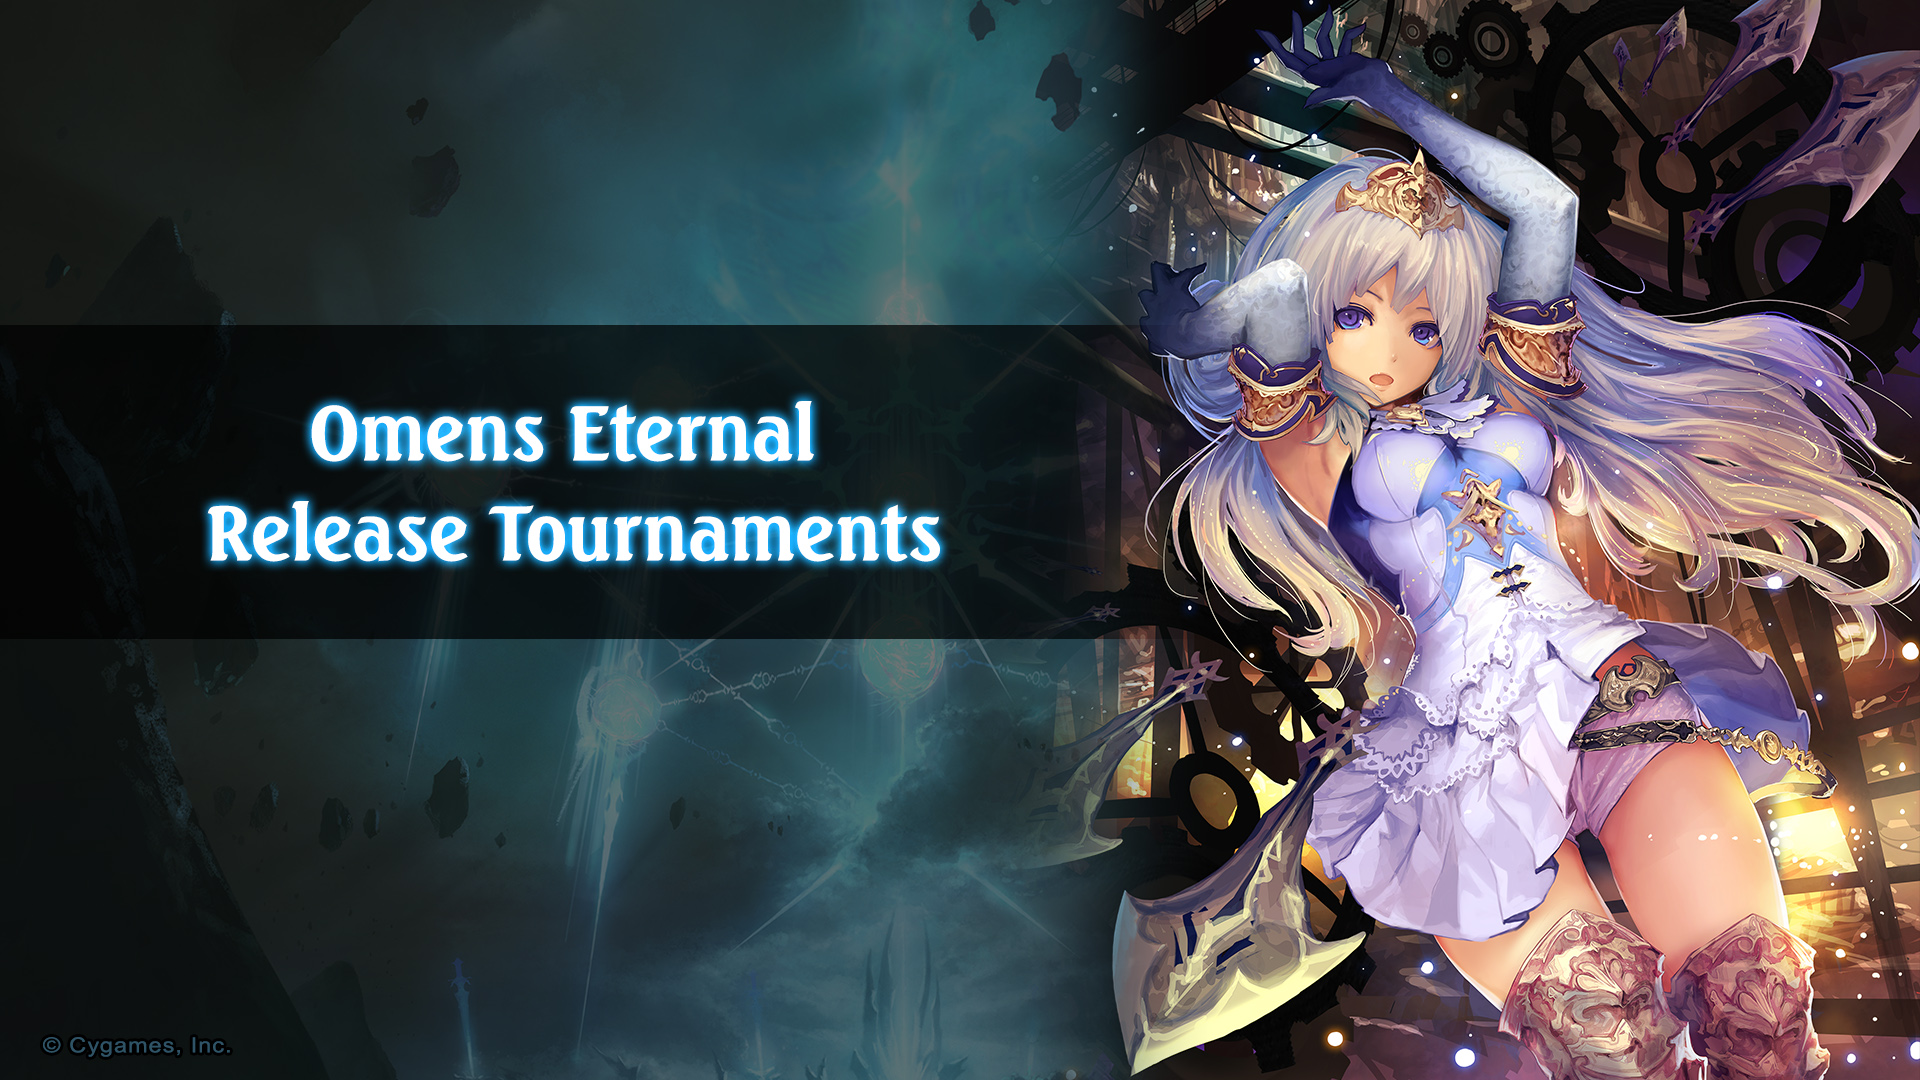 Omens Eternal Release Tournaments